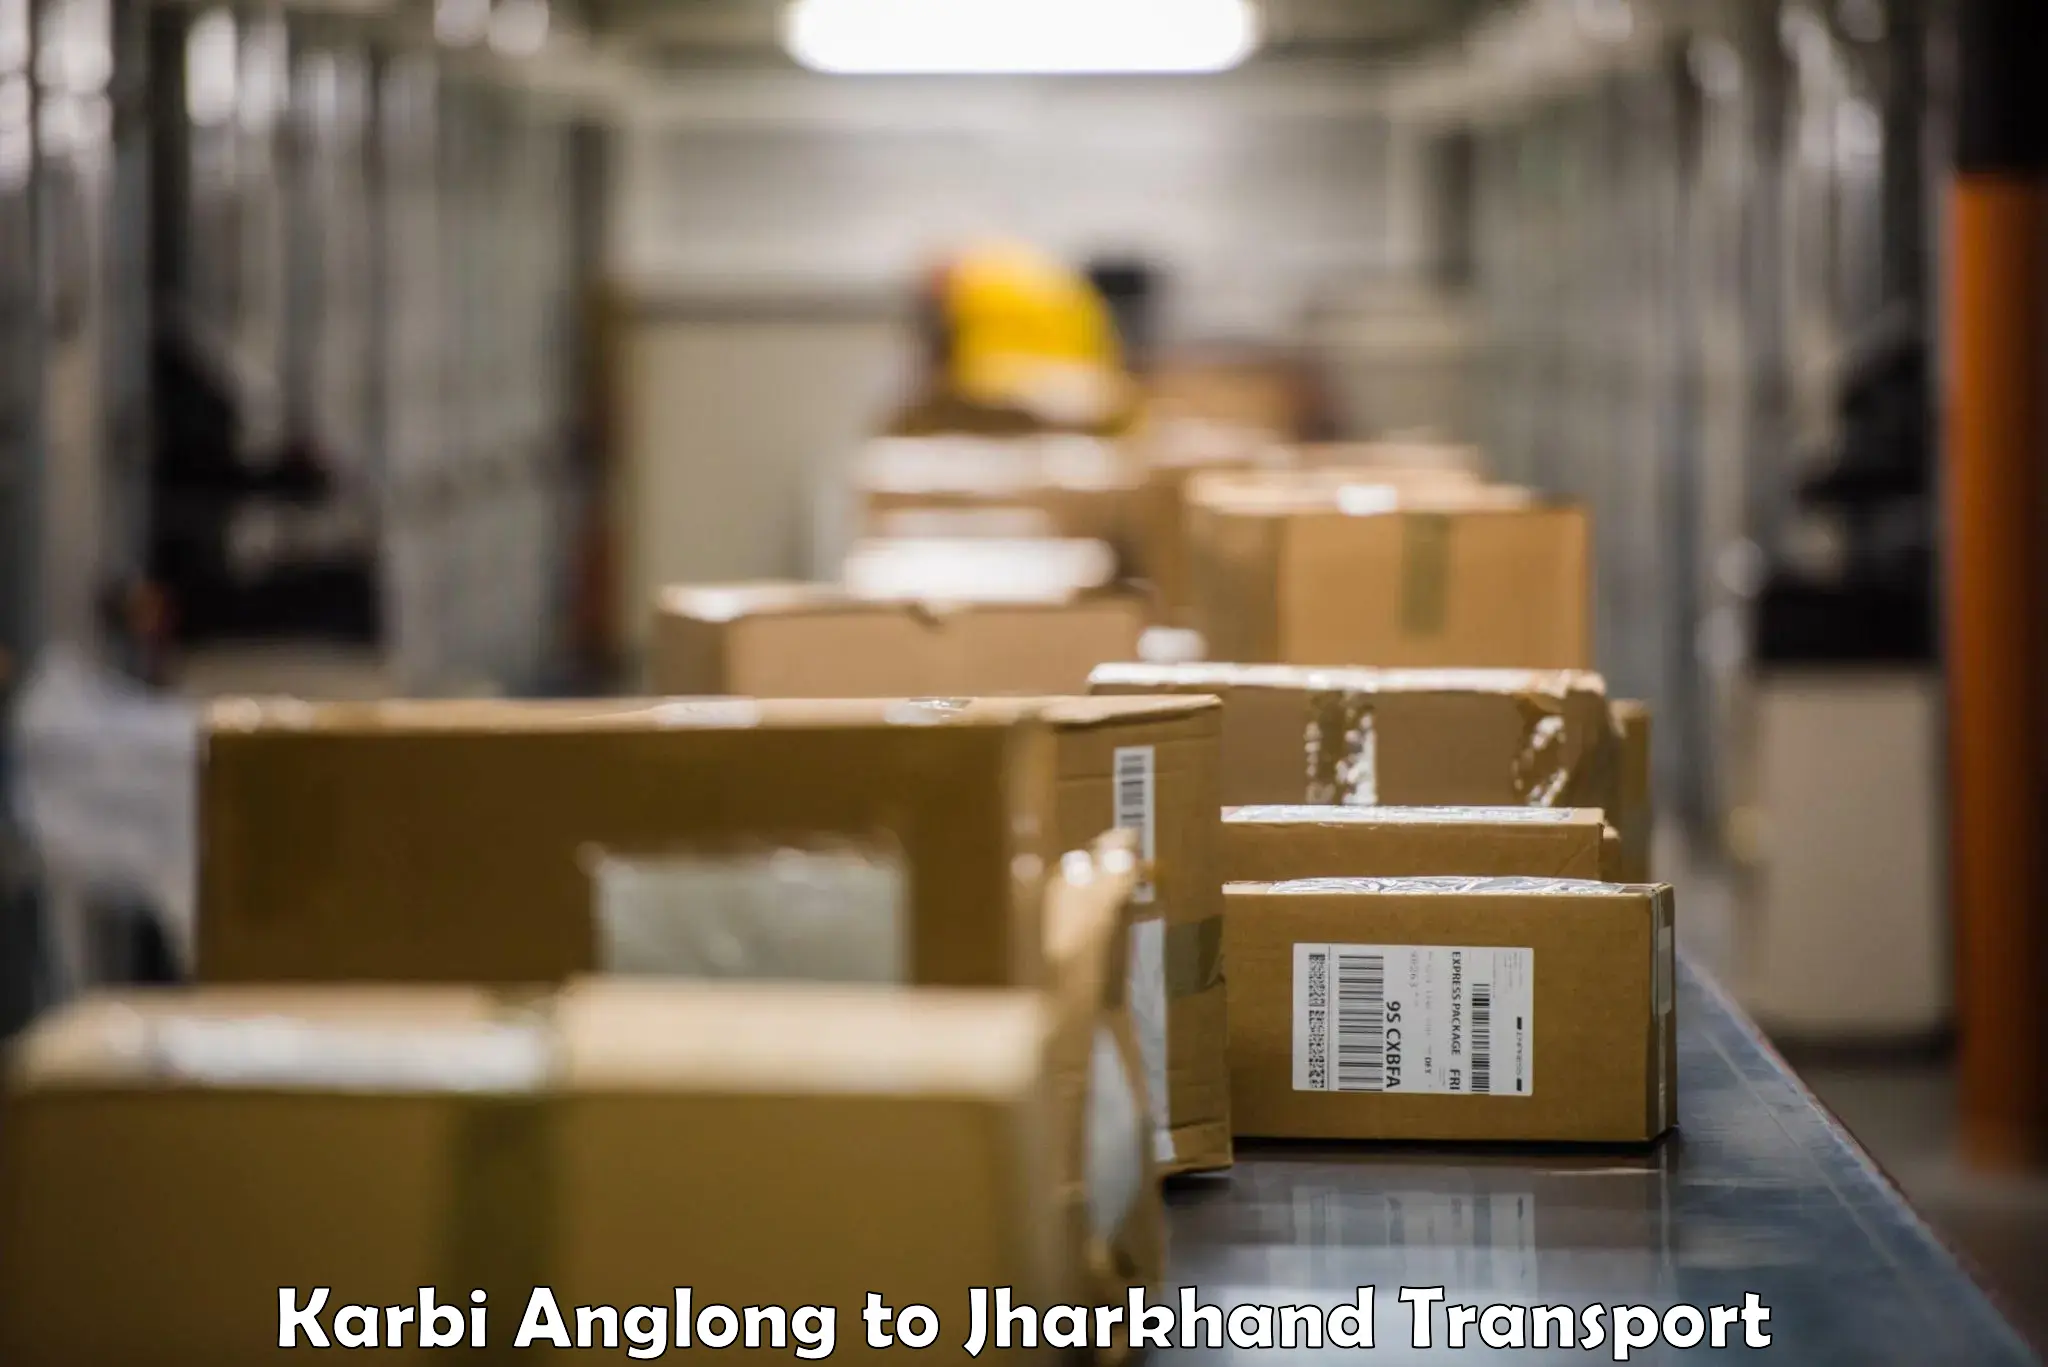 Truck transport companies in India Karbi Anglong to Bagodar